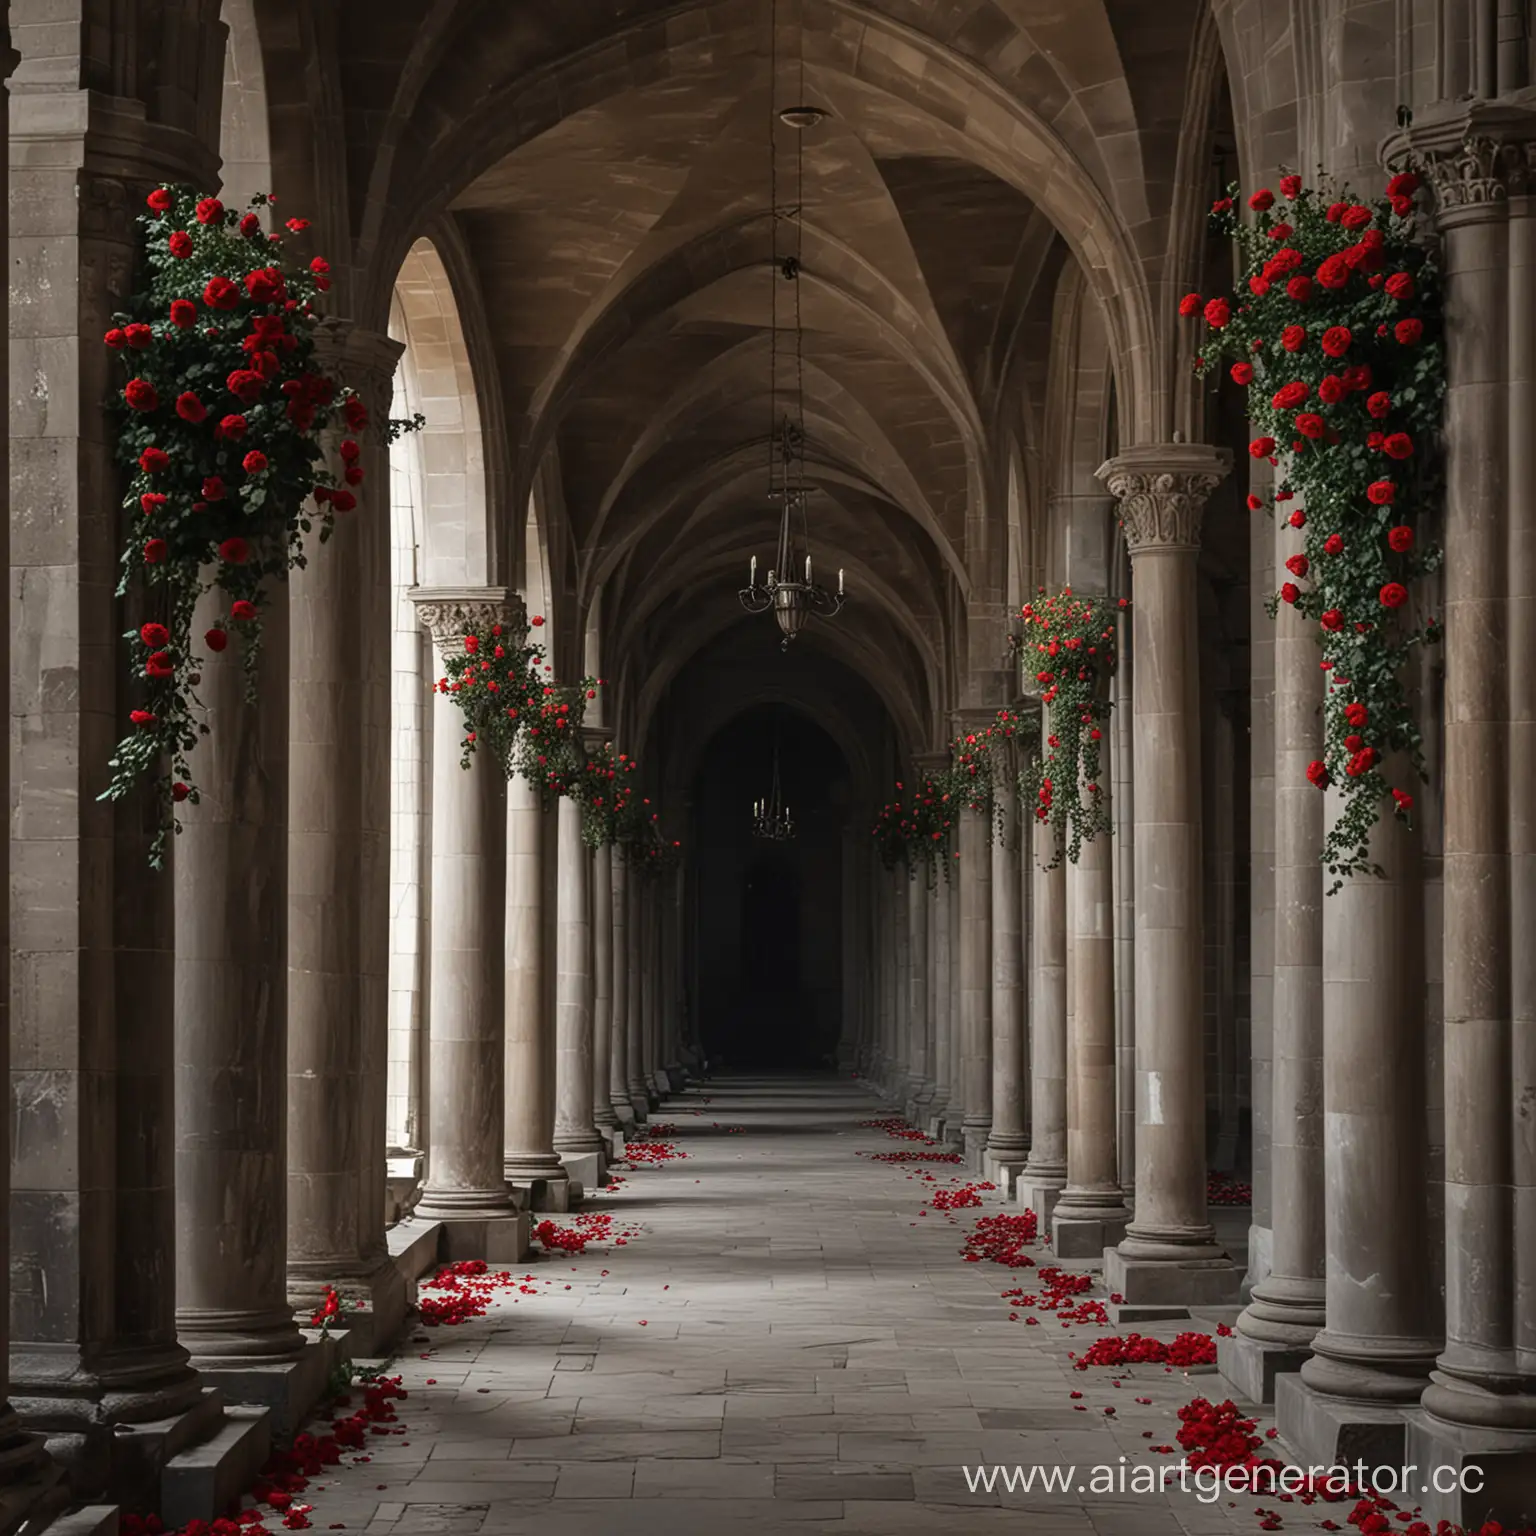 зал темной церкви с розами на столбах